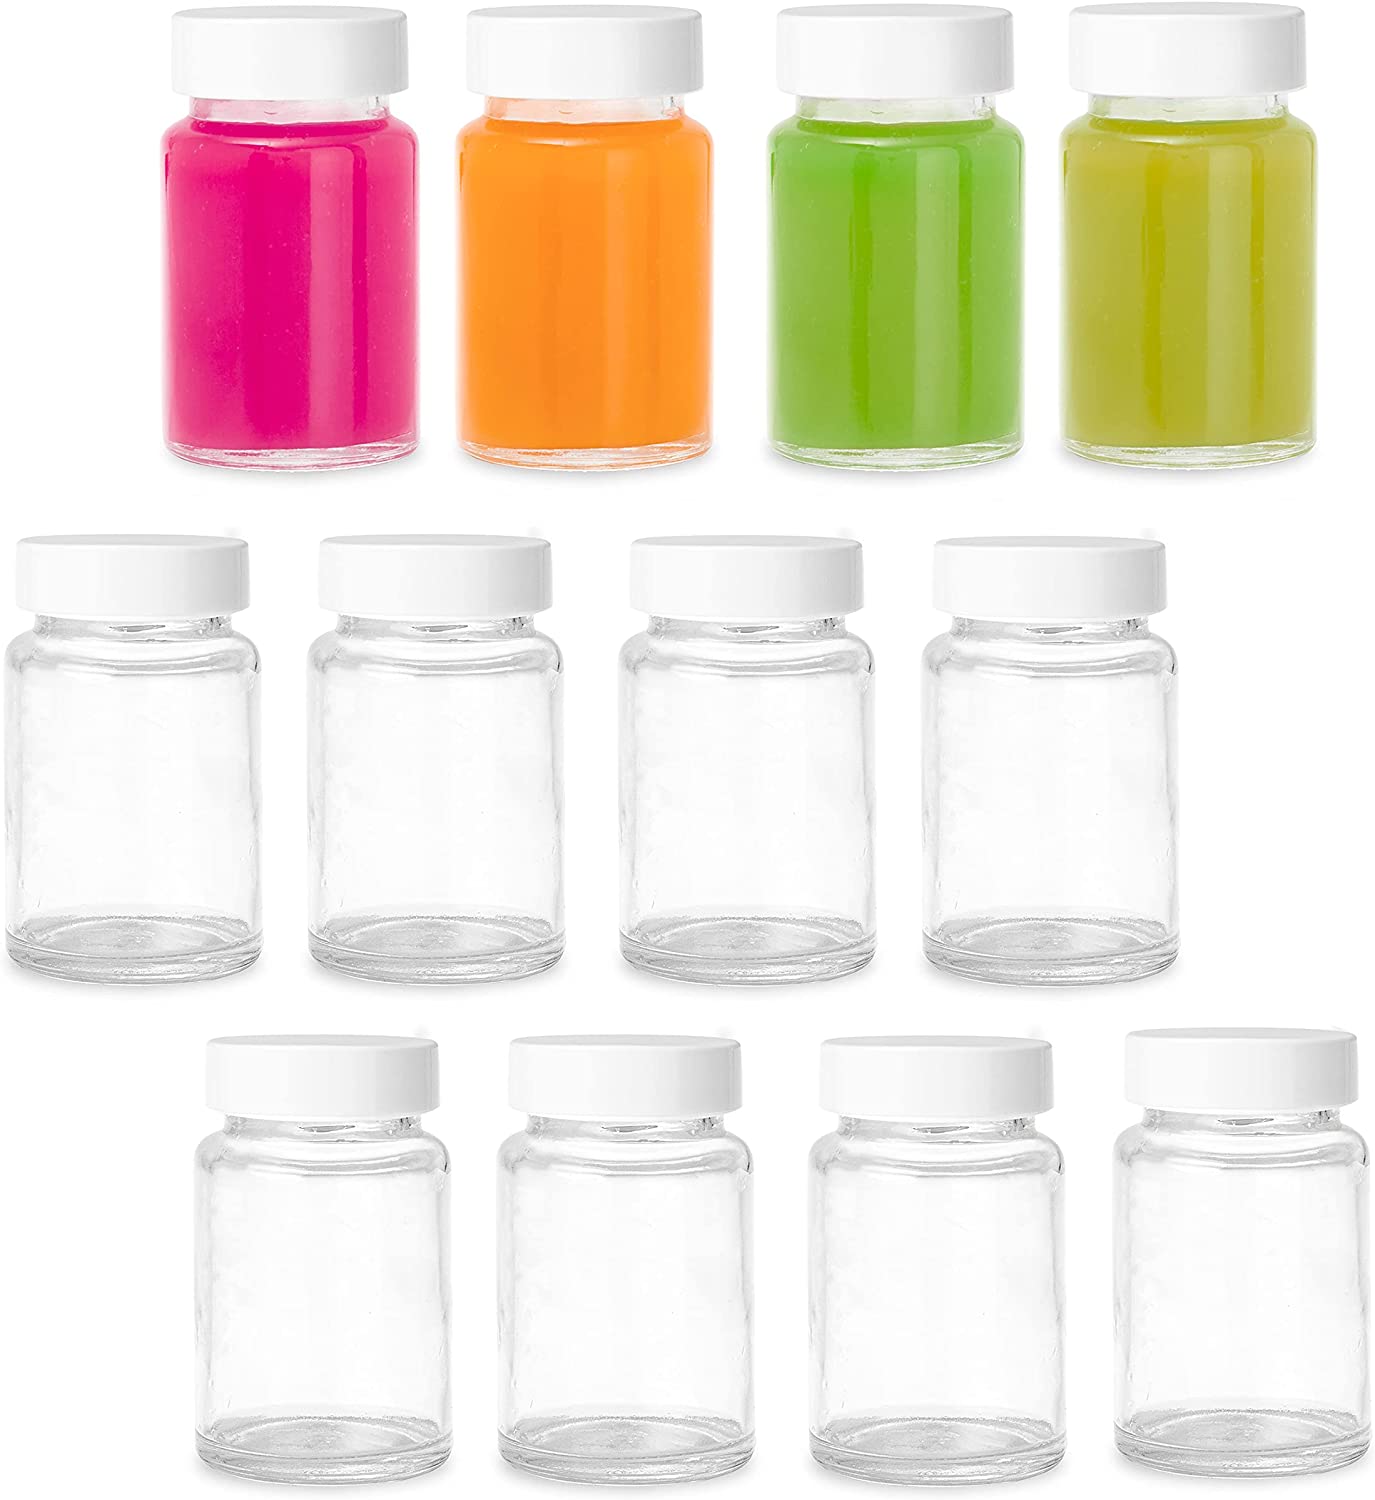 Crutello 3 Piece Airtight Glass Jars with Flip Top Lids - Kitchen